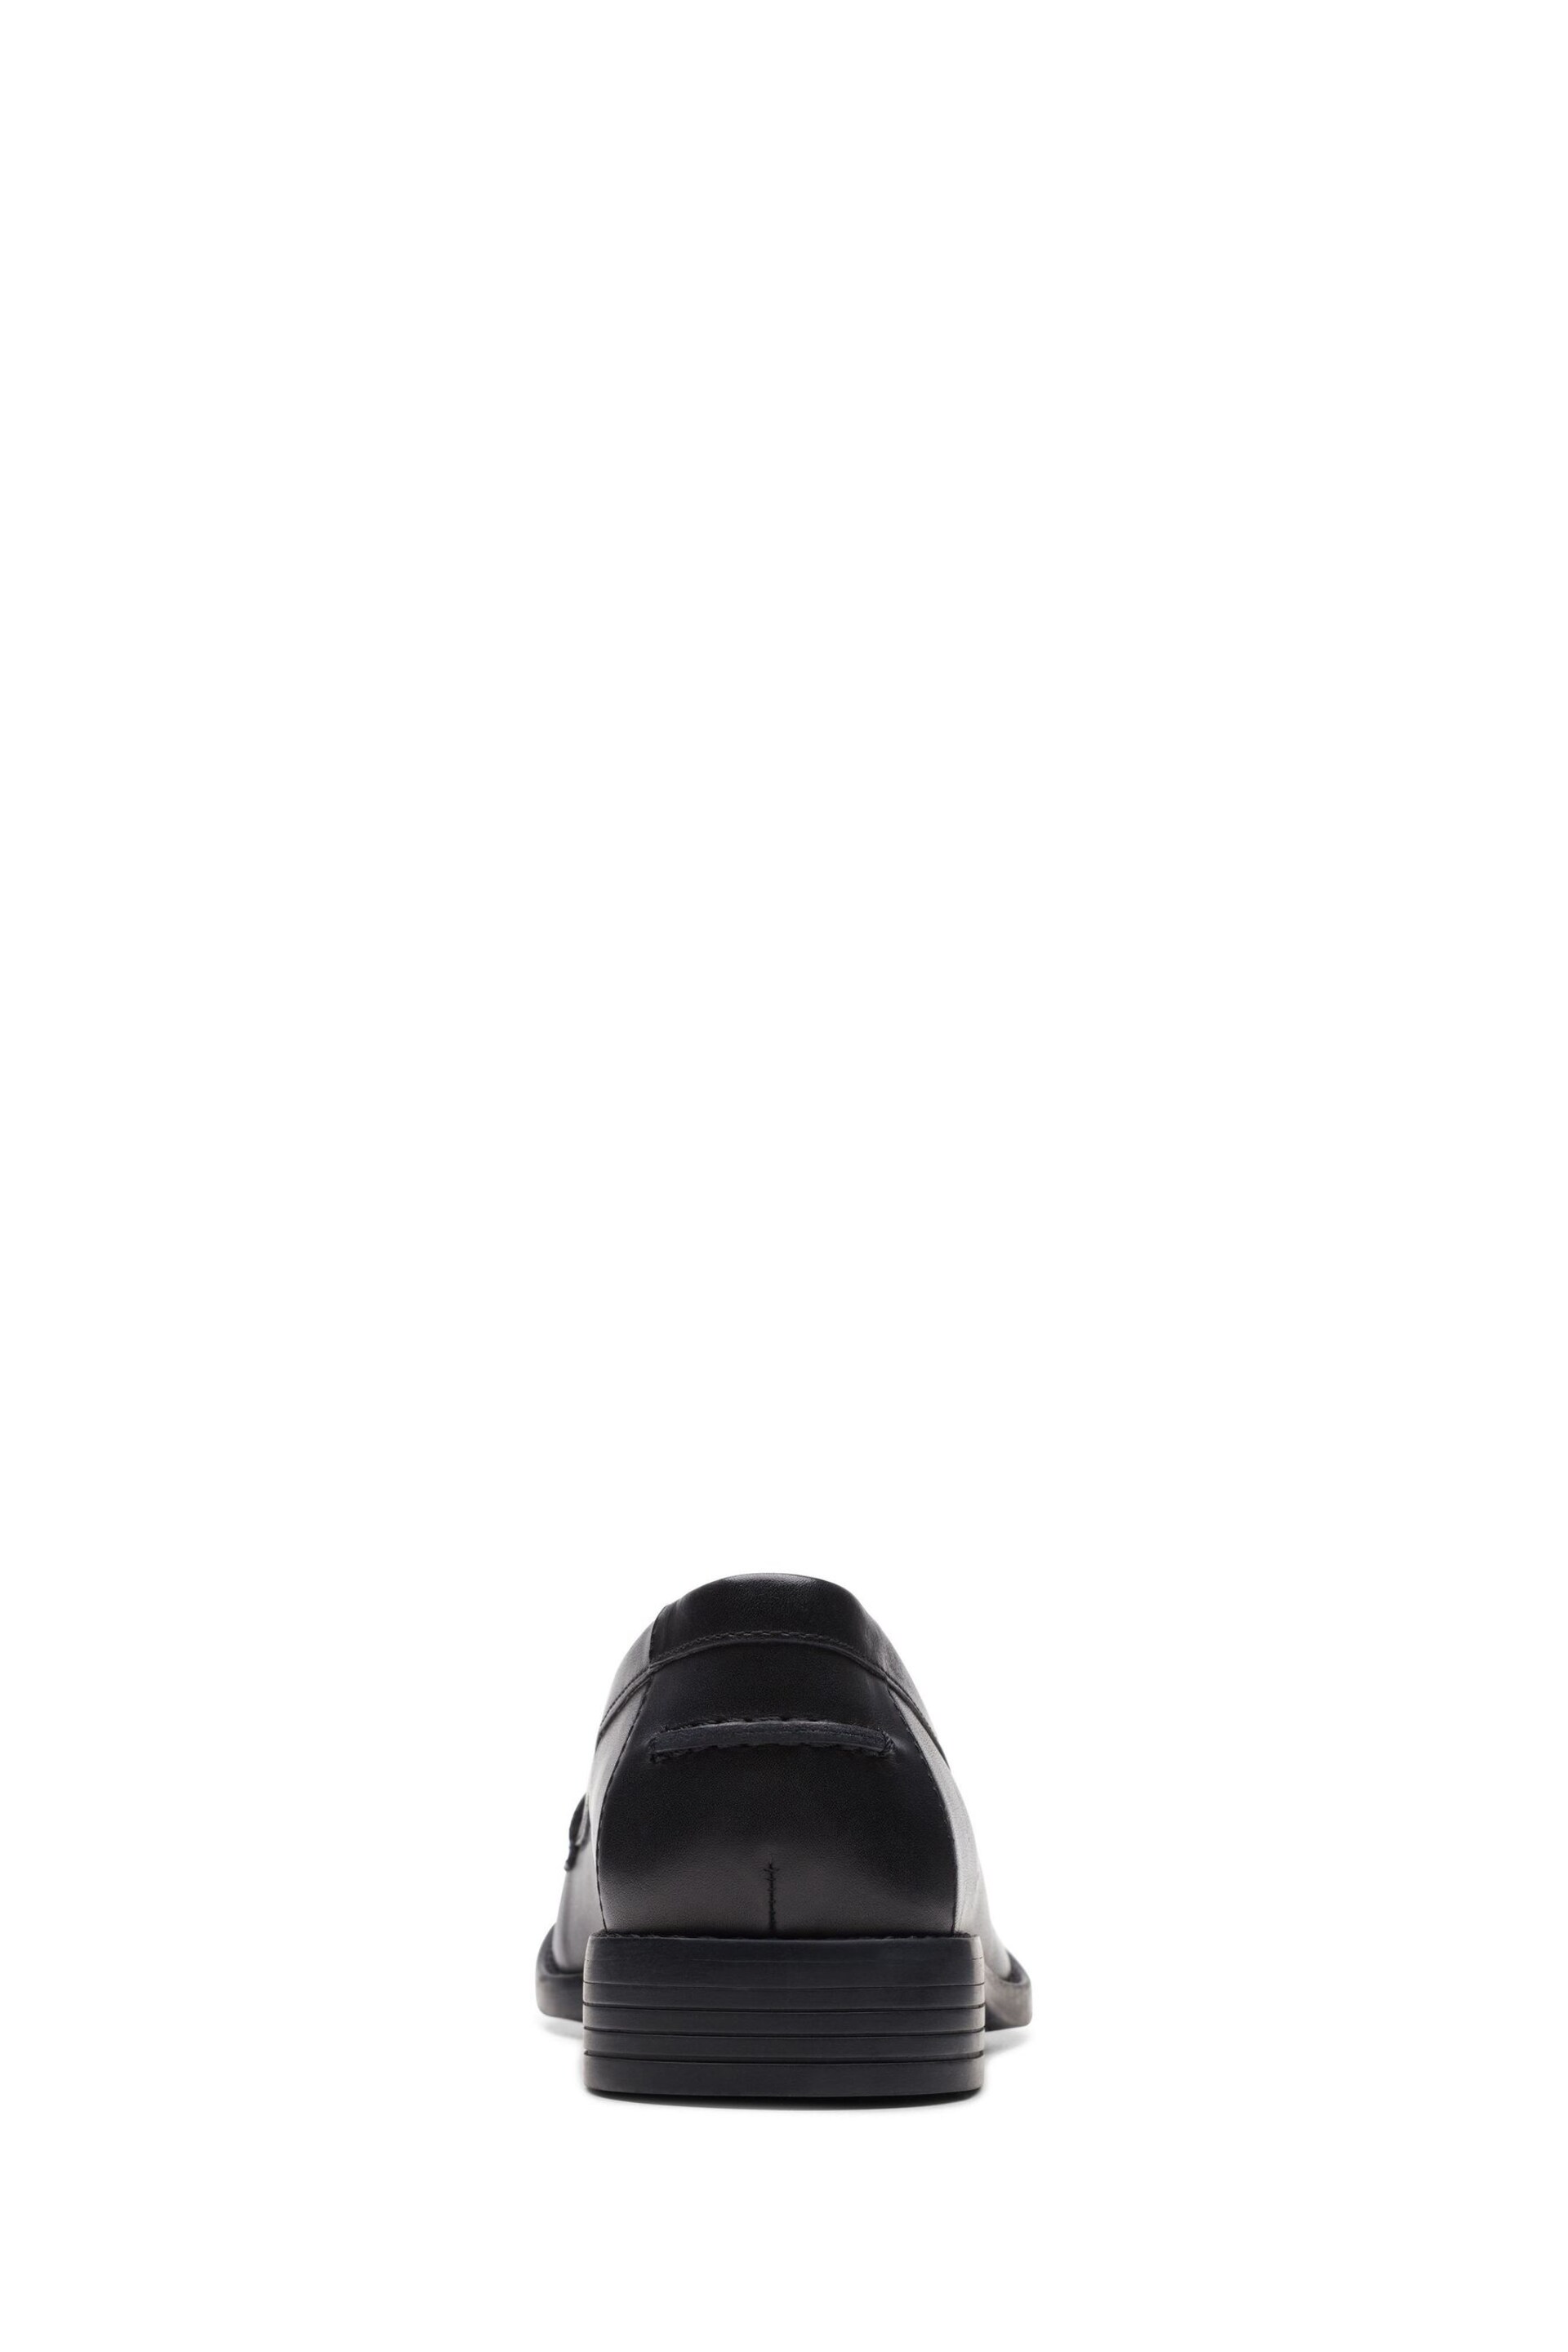 Clarks Black Standard Fit (F) Leather Loafer Shoes - Image 5 of 7